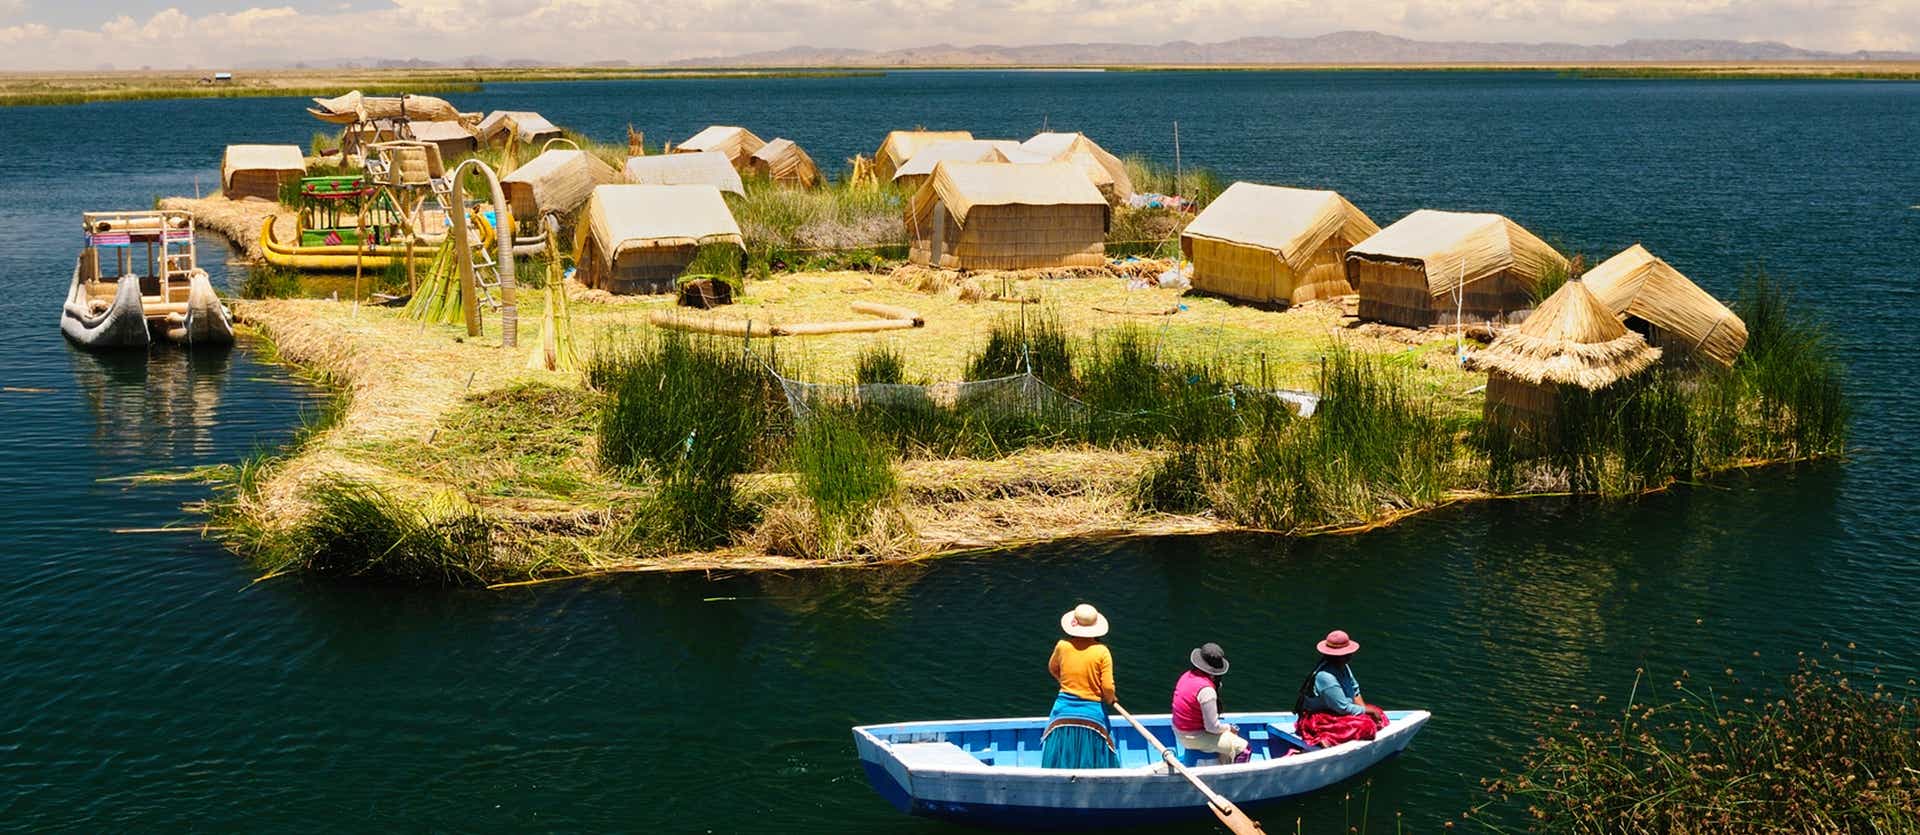 oating Islands <span class="iconos separador"></span> Lake Titicaca <span class="iconos separador"></span> Peru